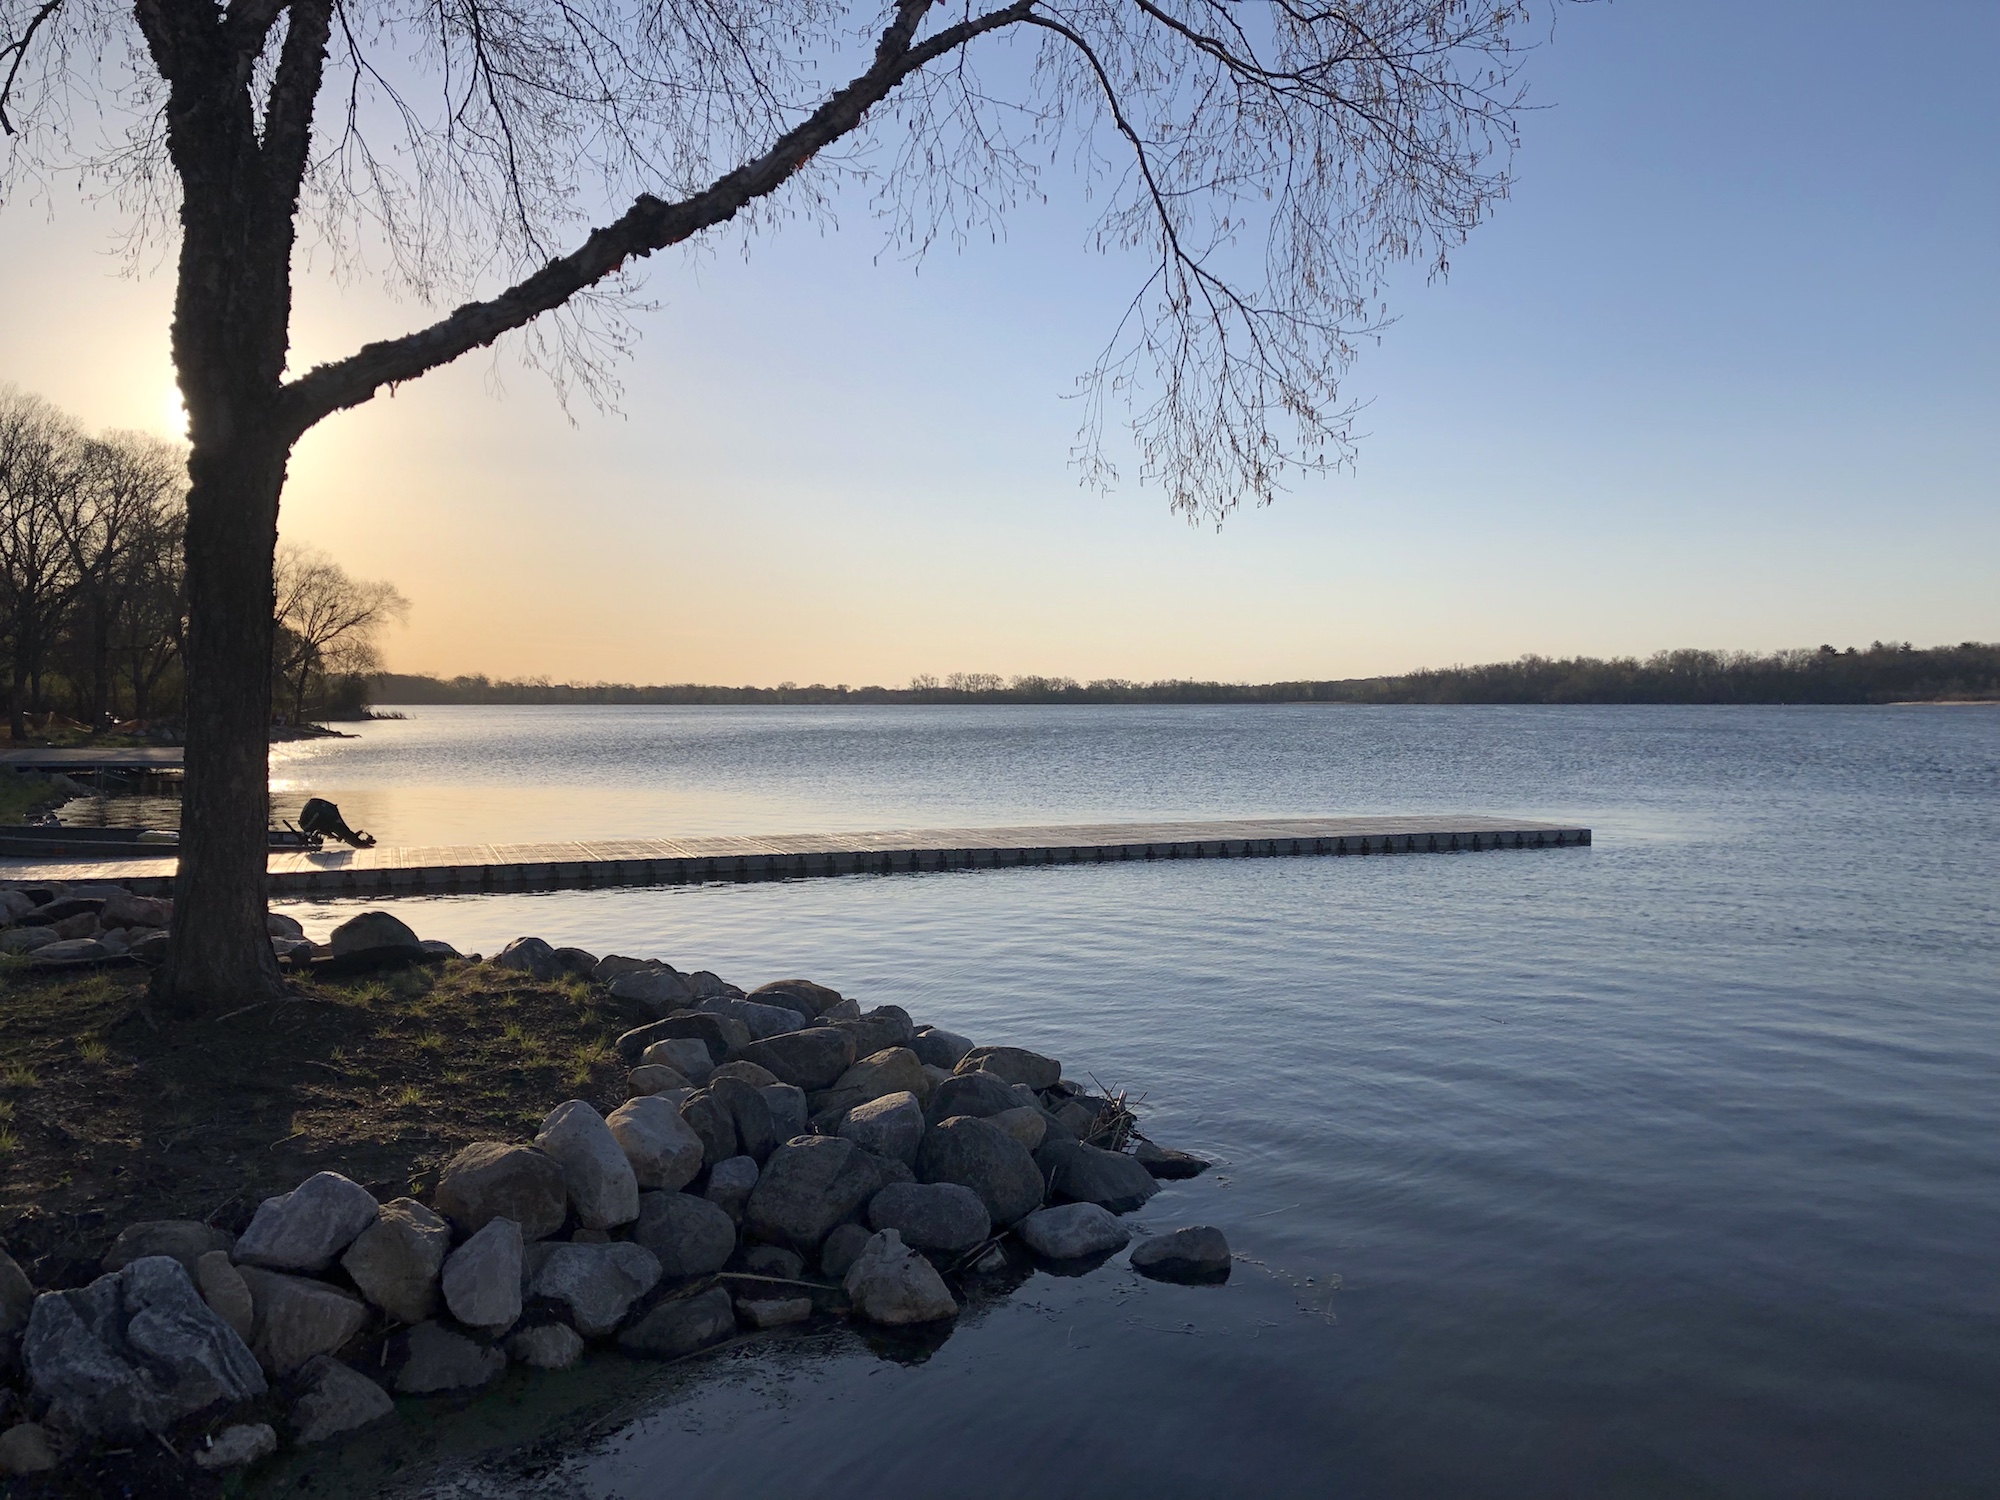 Lake Wingra on April 26, 2019.